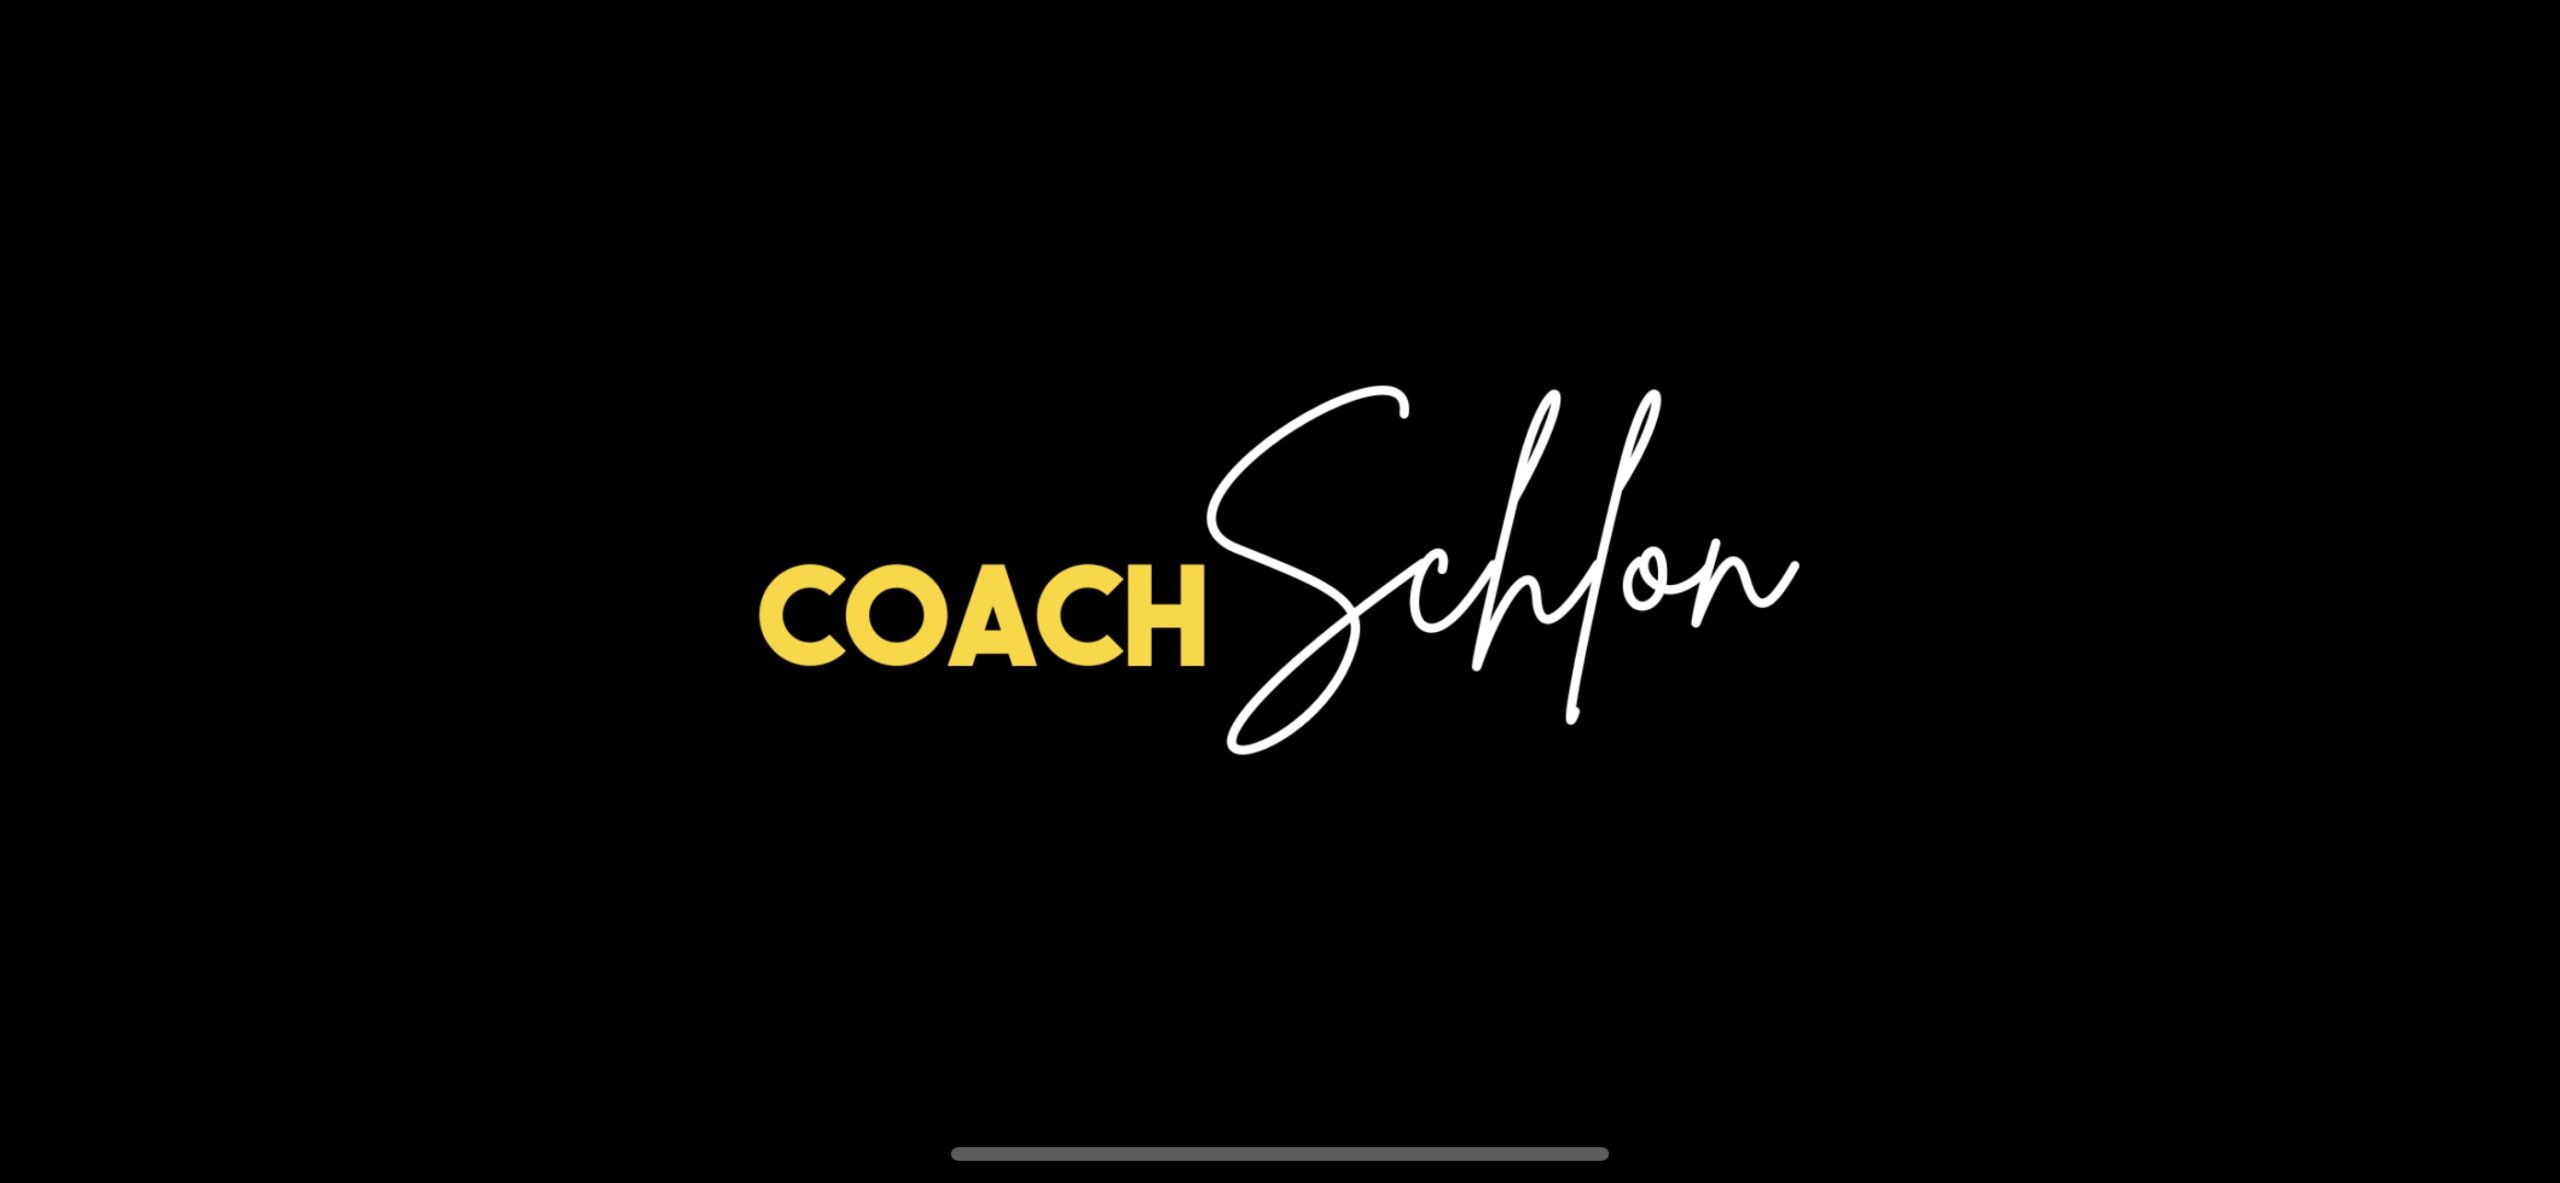 Coach Schlon Announces the Launch of a New Fitness Accountability App. 4